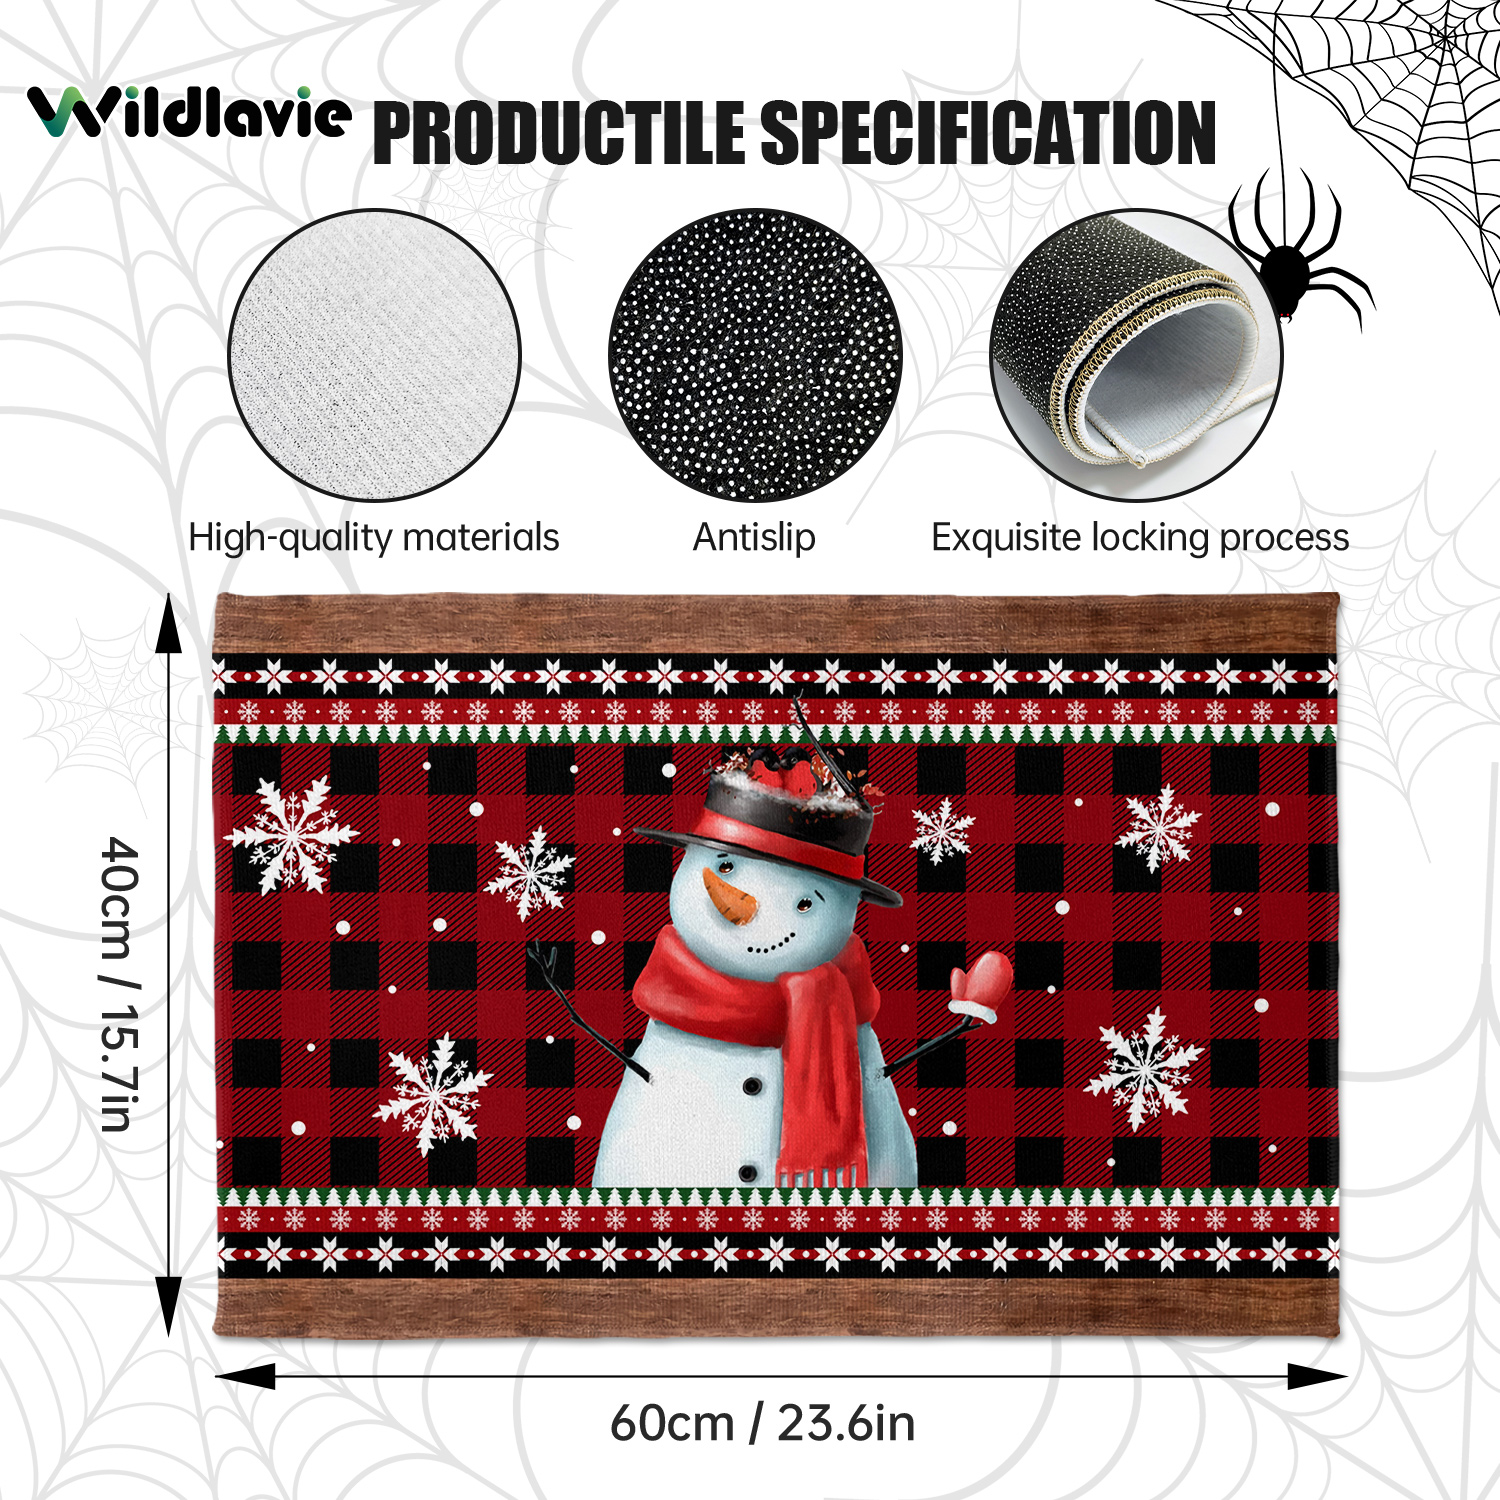  Christmas Decorative Doormat-Let It Snow Winter Snowflake,Non  Slip Indoor/Outdoor/Front Door/Bathroom Entrance Mats Rugs Carpet : Patio,  Lawn & Garden